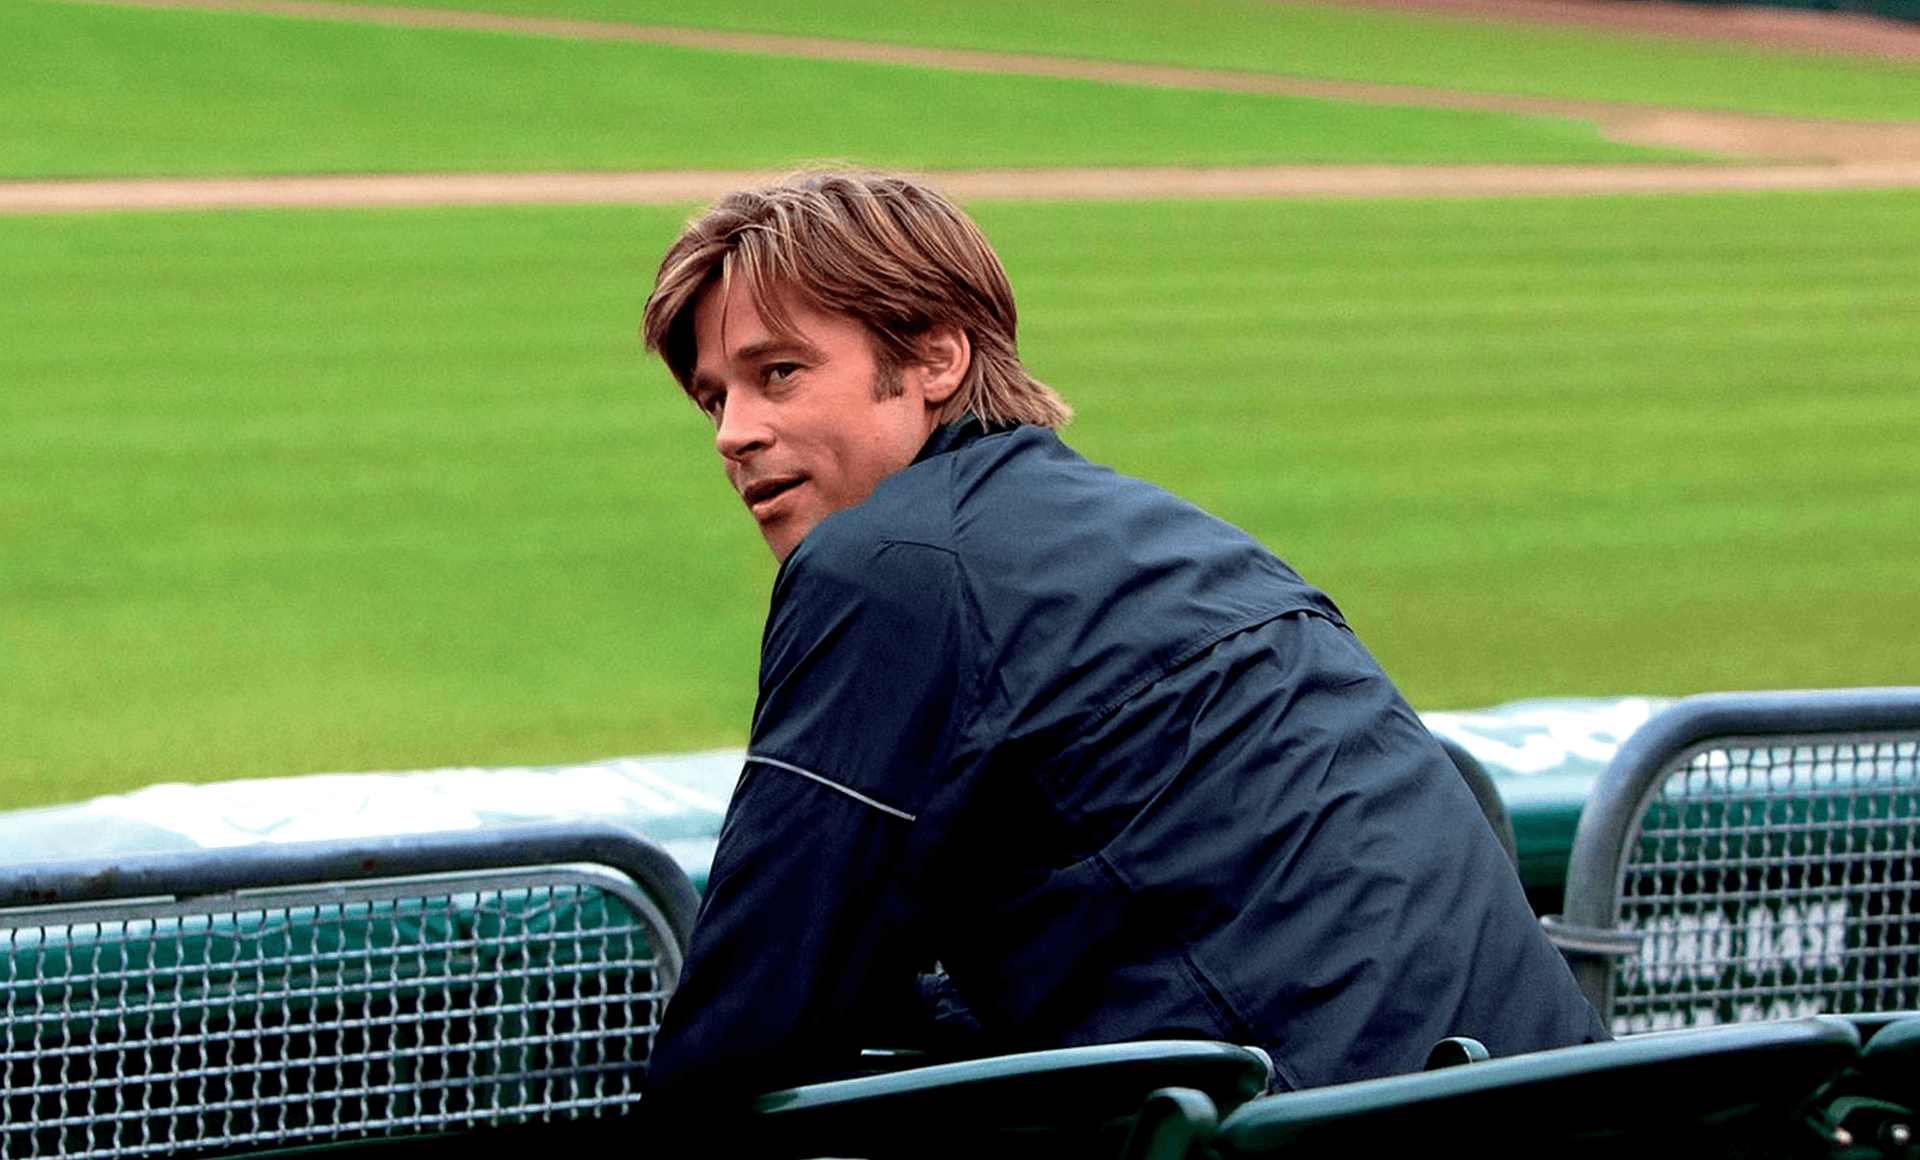 One of the best baseball movies starring Brad Pitt.